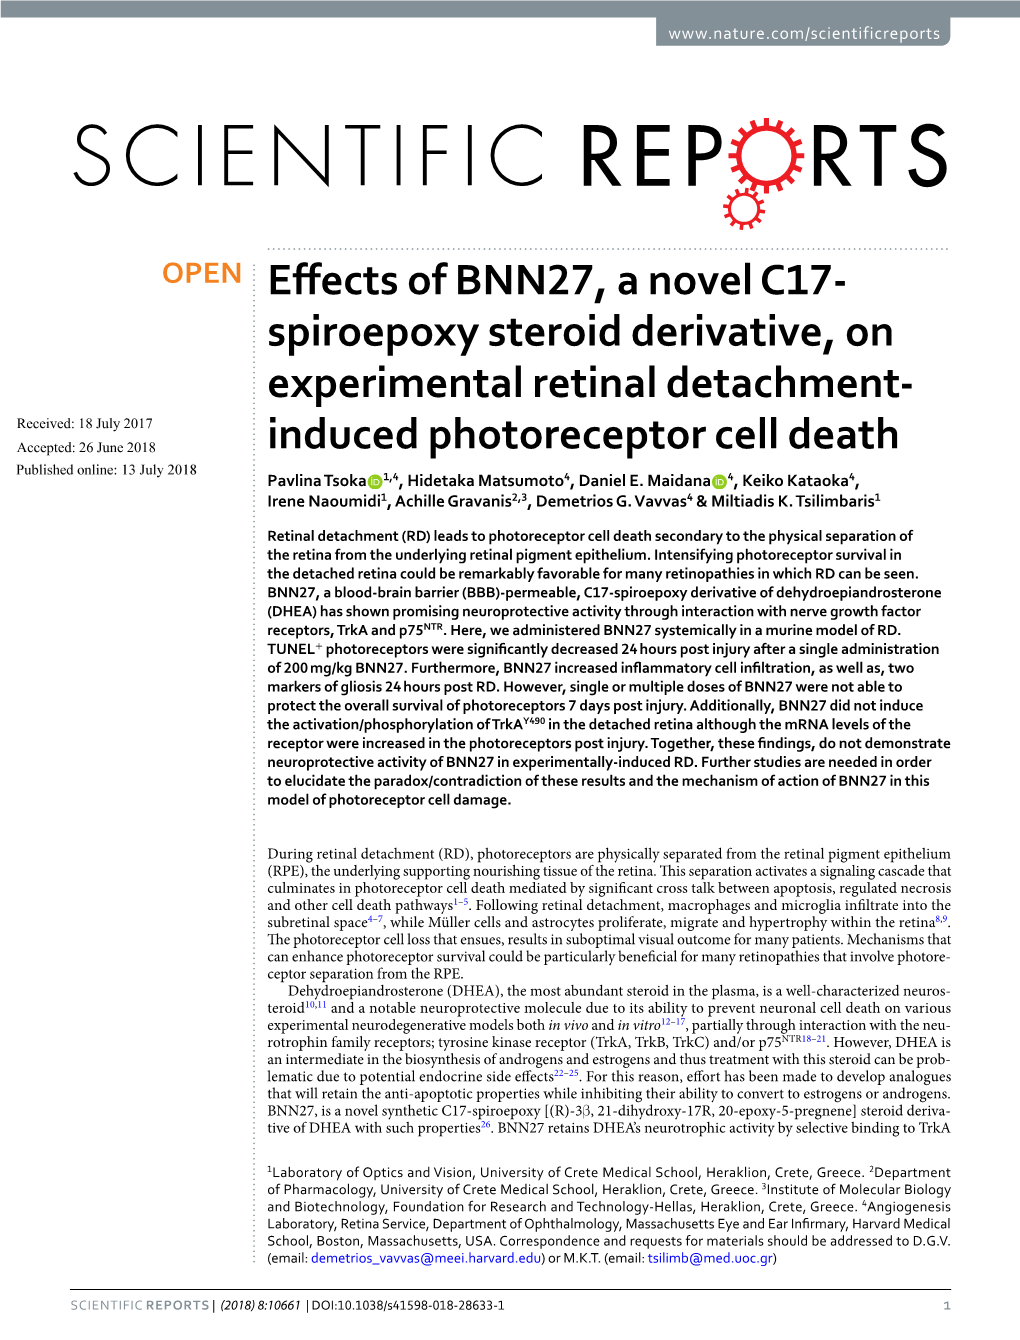 Effects of BNN27, a Novel C17-Spiroepoxy Steroid Derivative